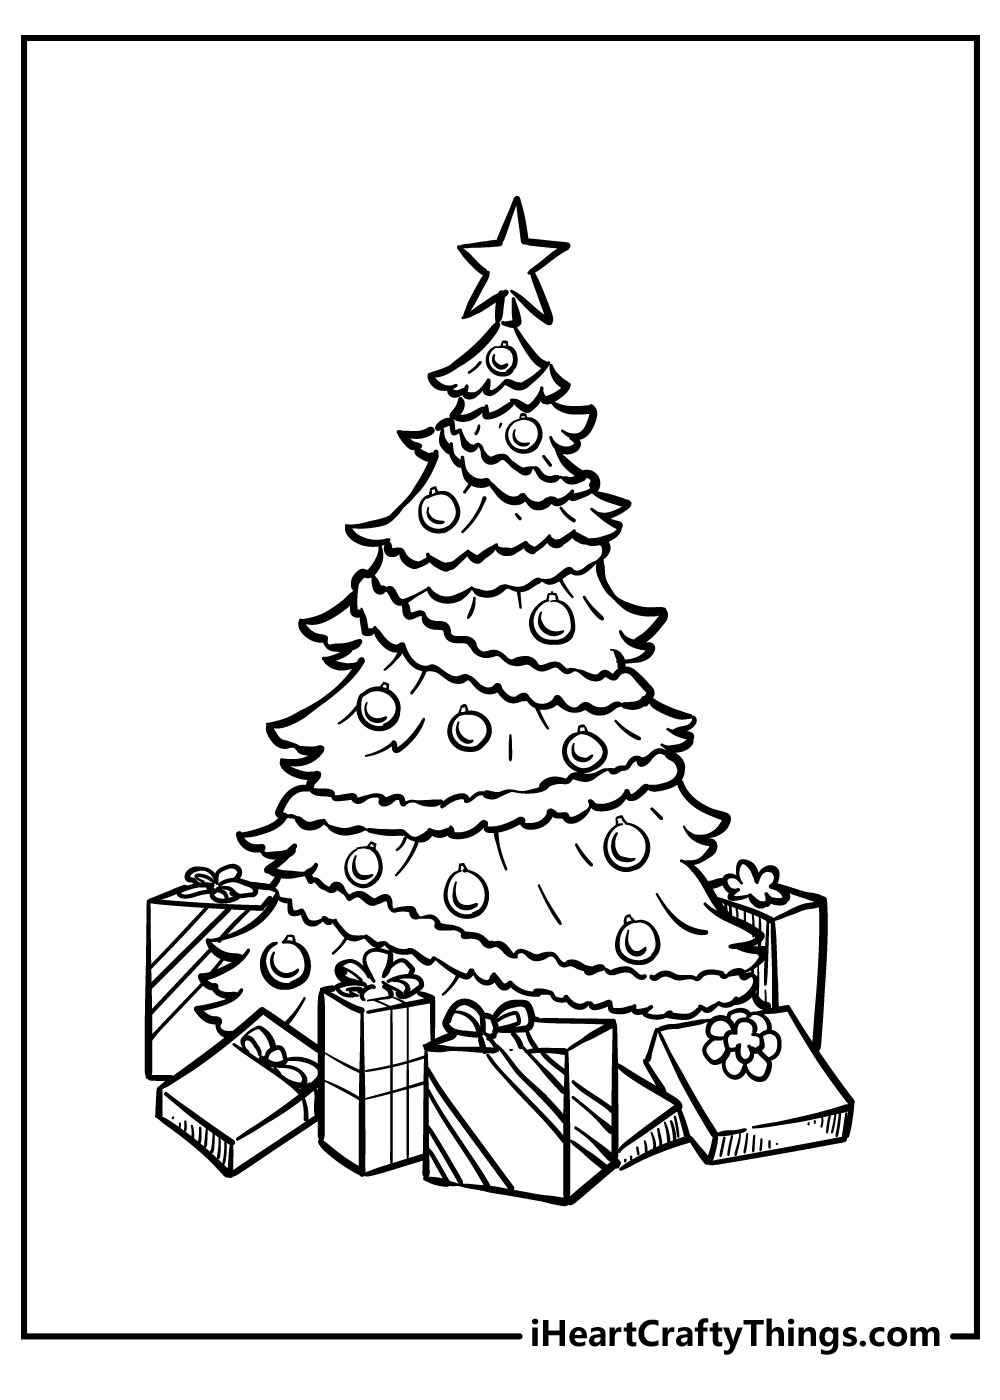 Christmas Tree Coloring Page Printable Home Design Ideas